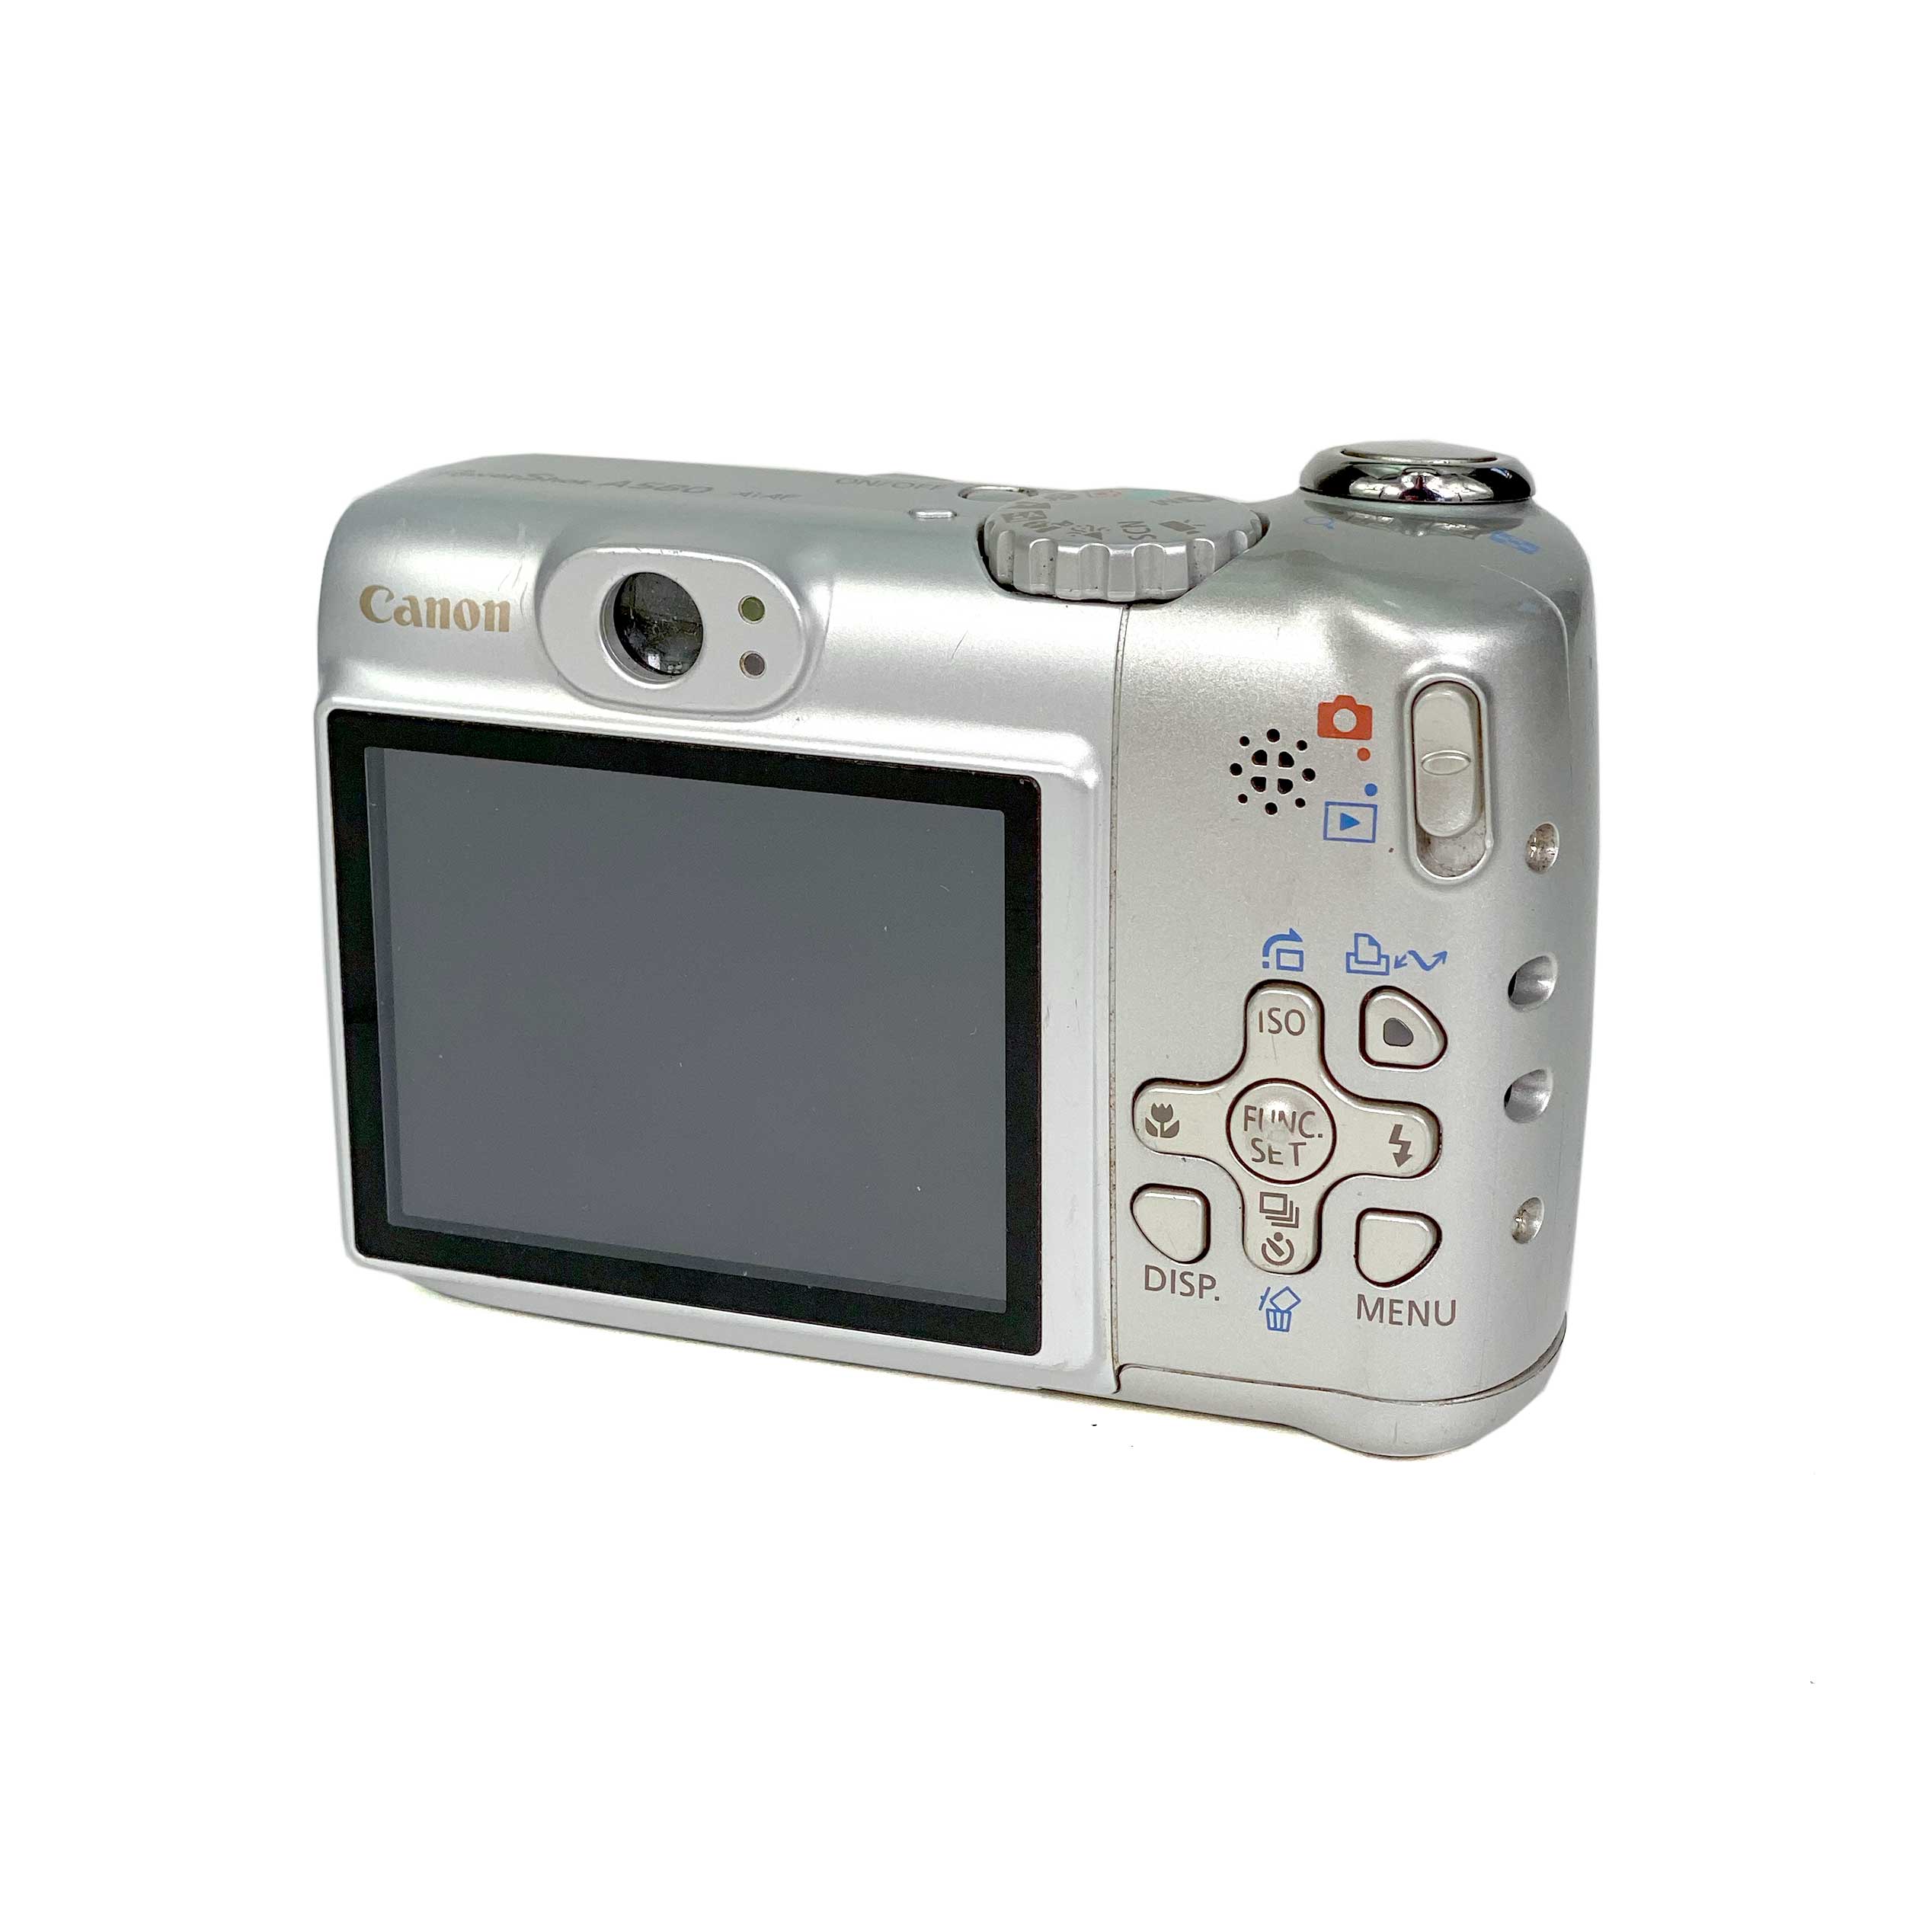 Canon PowerShot A580 Digital Compact